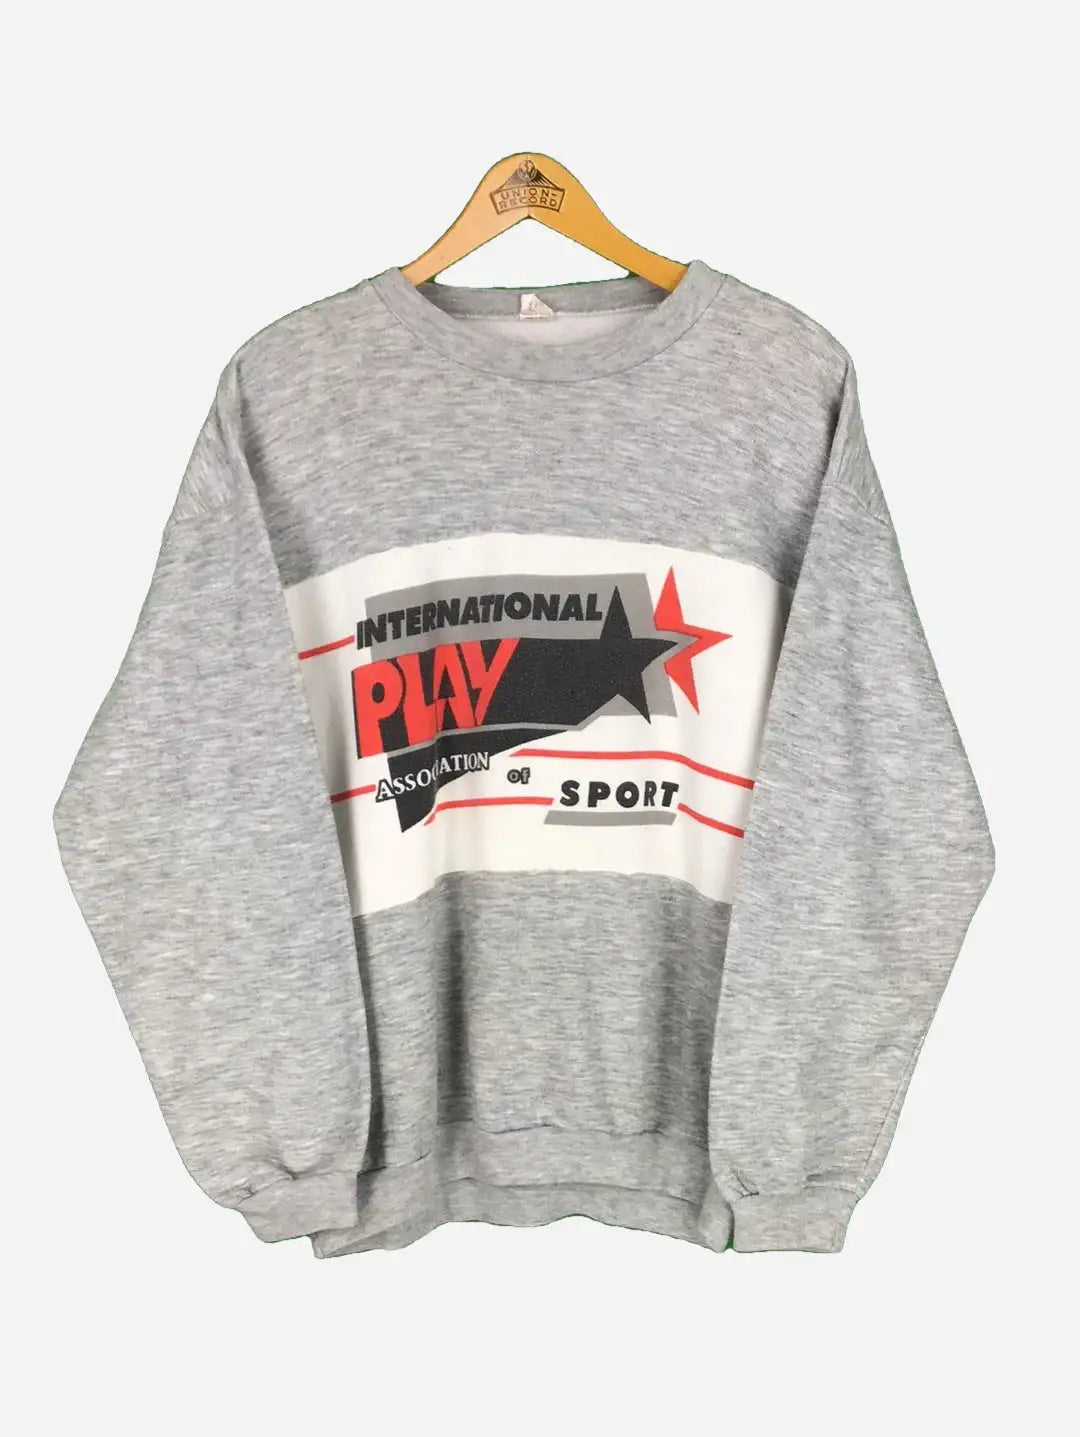 International Play Association of Sport Sweater (L)